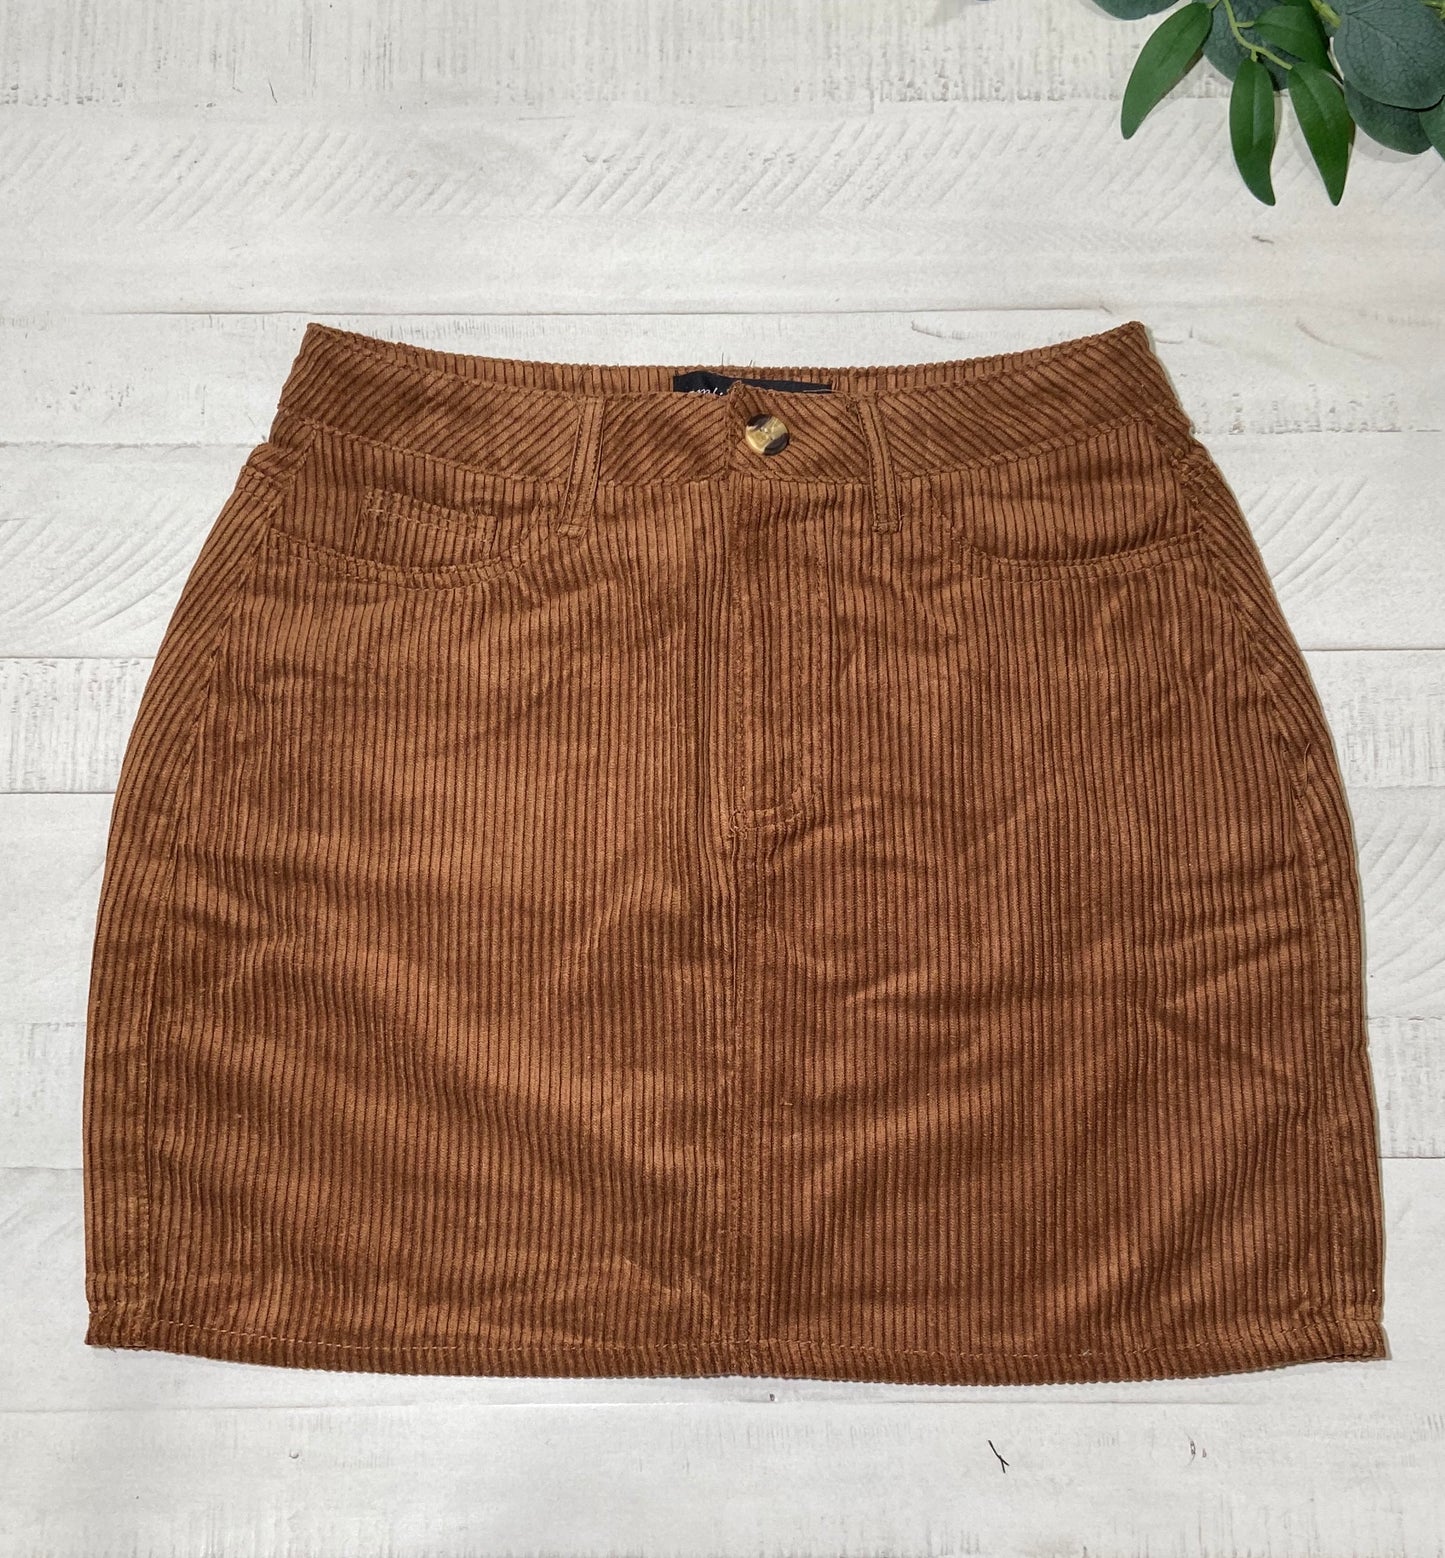 Corduroy Skirt in Tan, Black and Brown